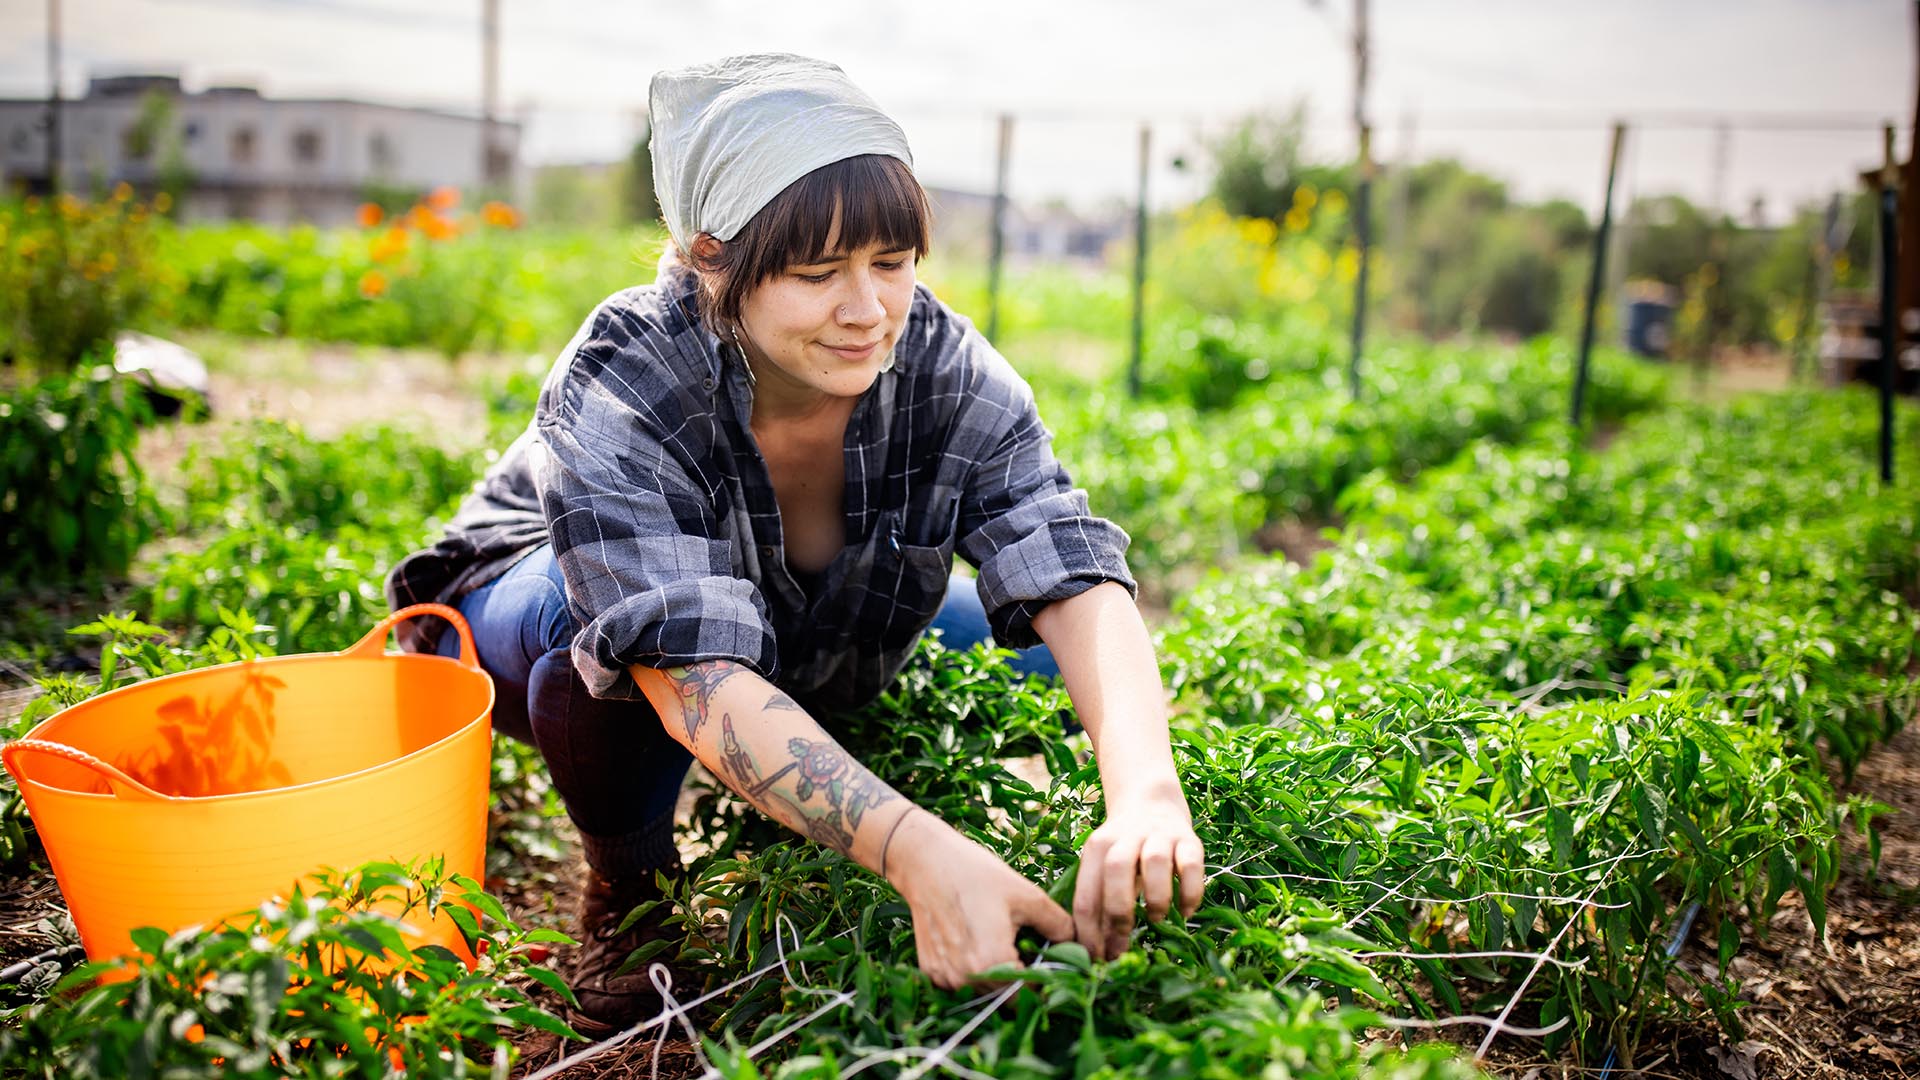 MSU Denver’s Public Health major, Angelica Marley, works at Sprout City Farms harvesting vegetables